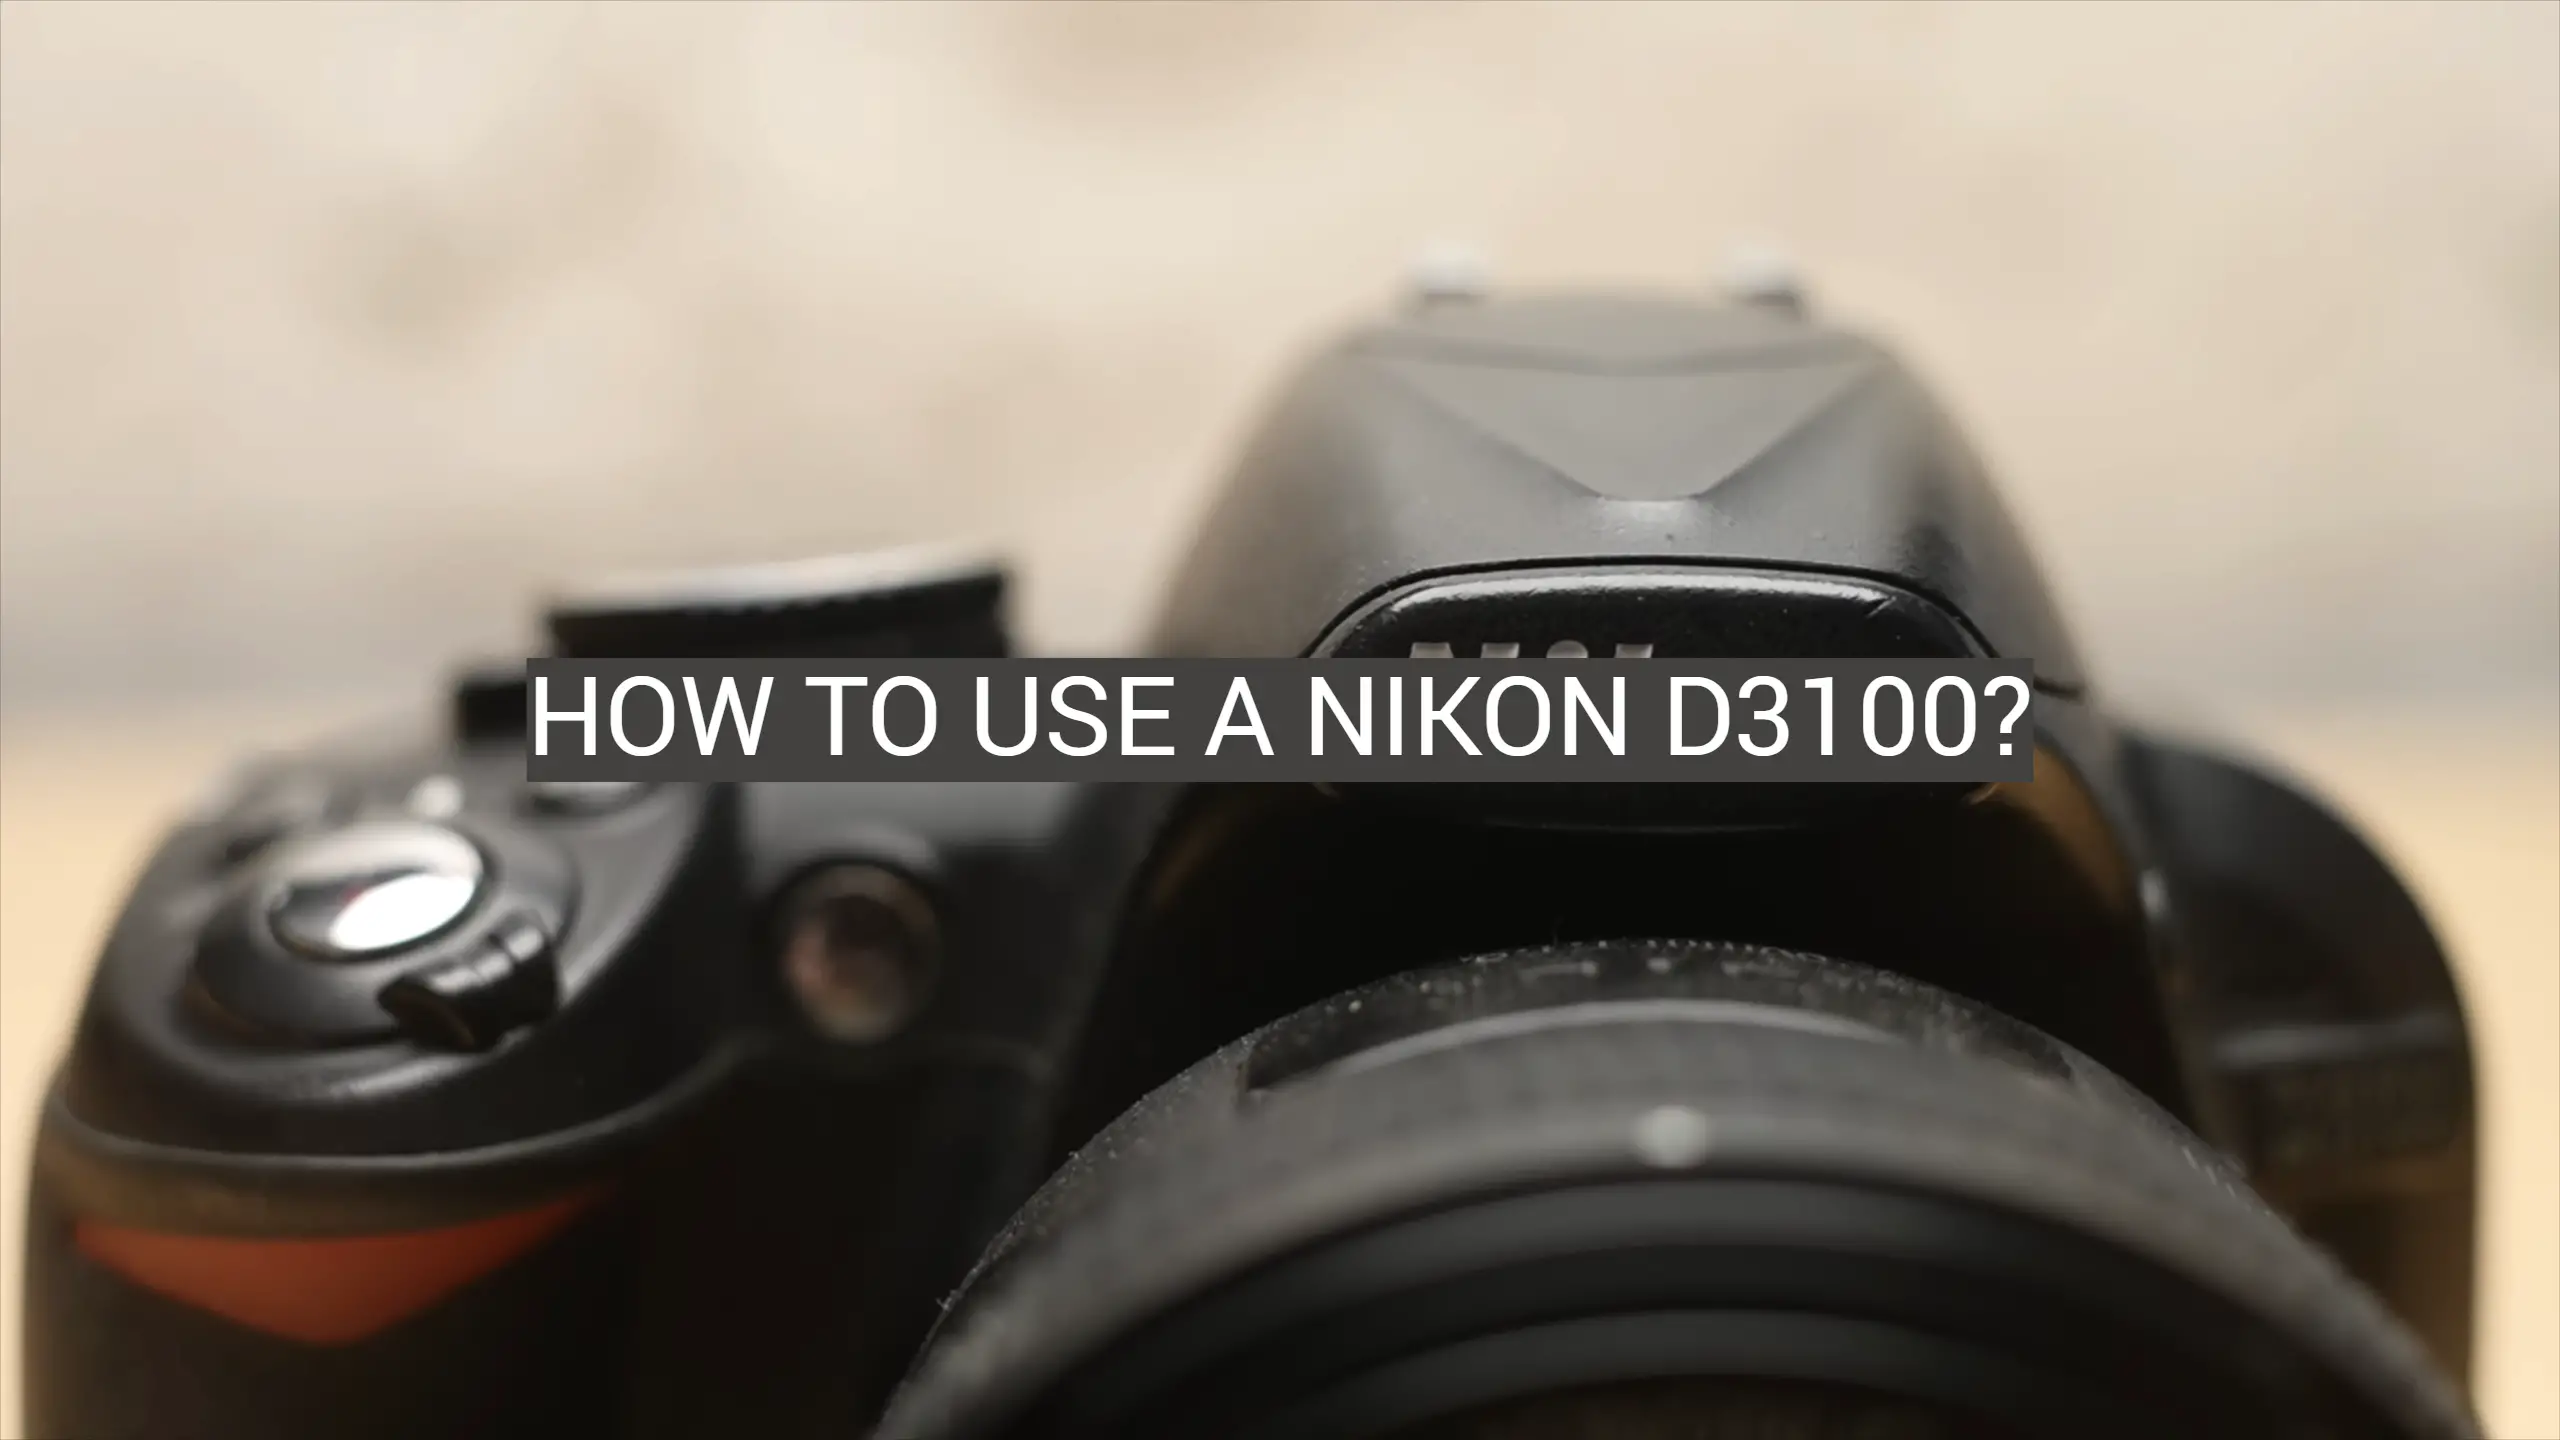 How to Use a Nikon D3100?